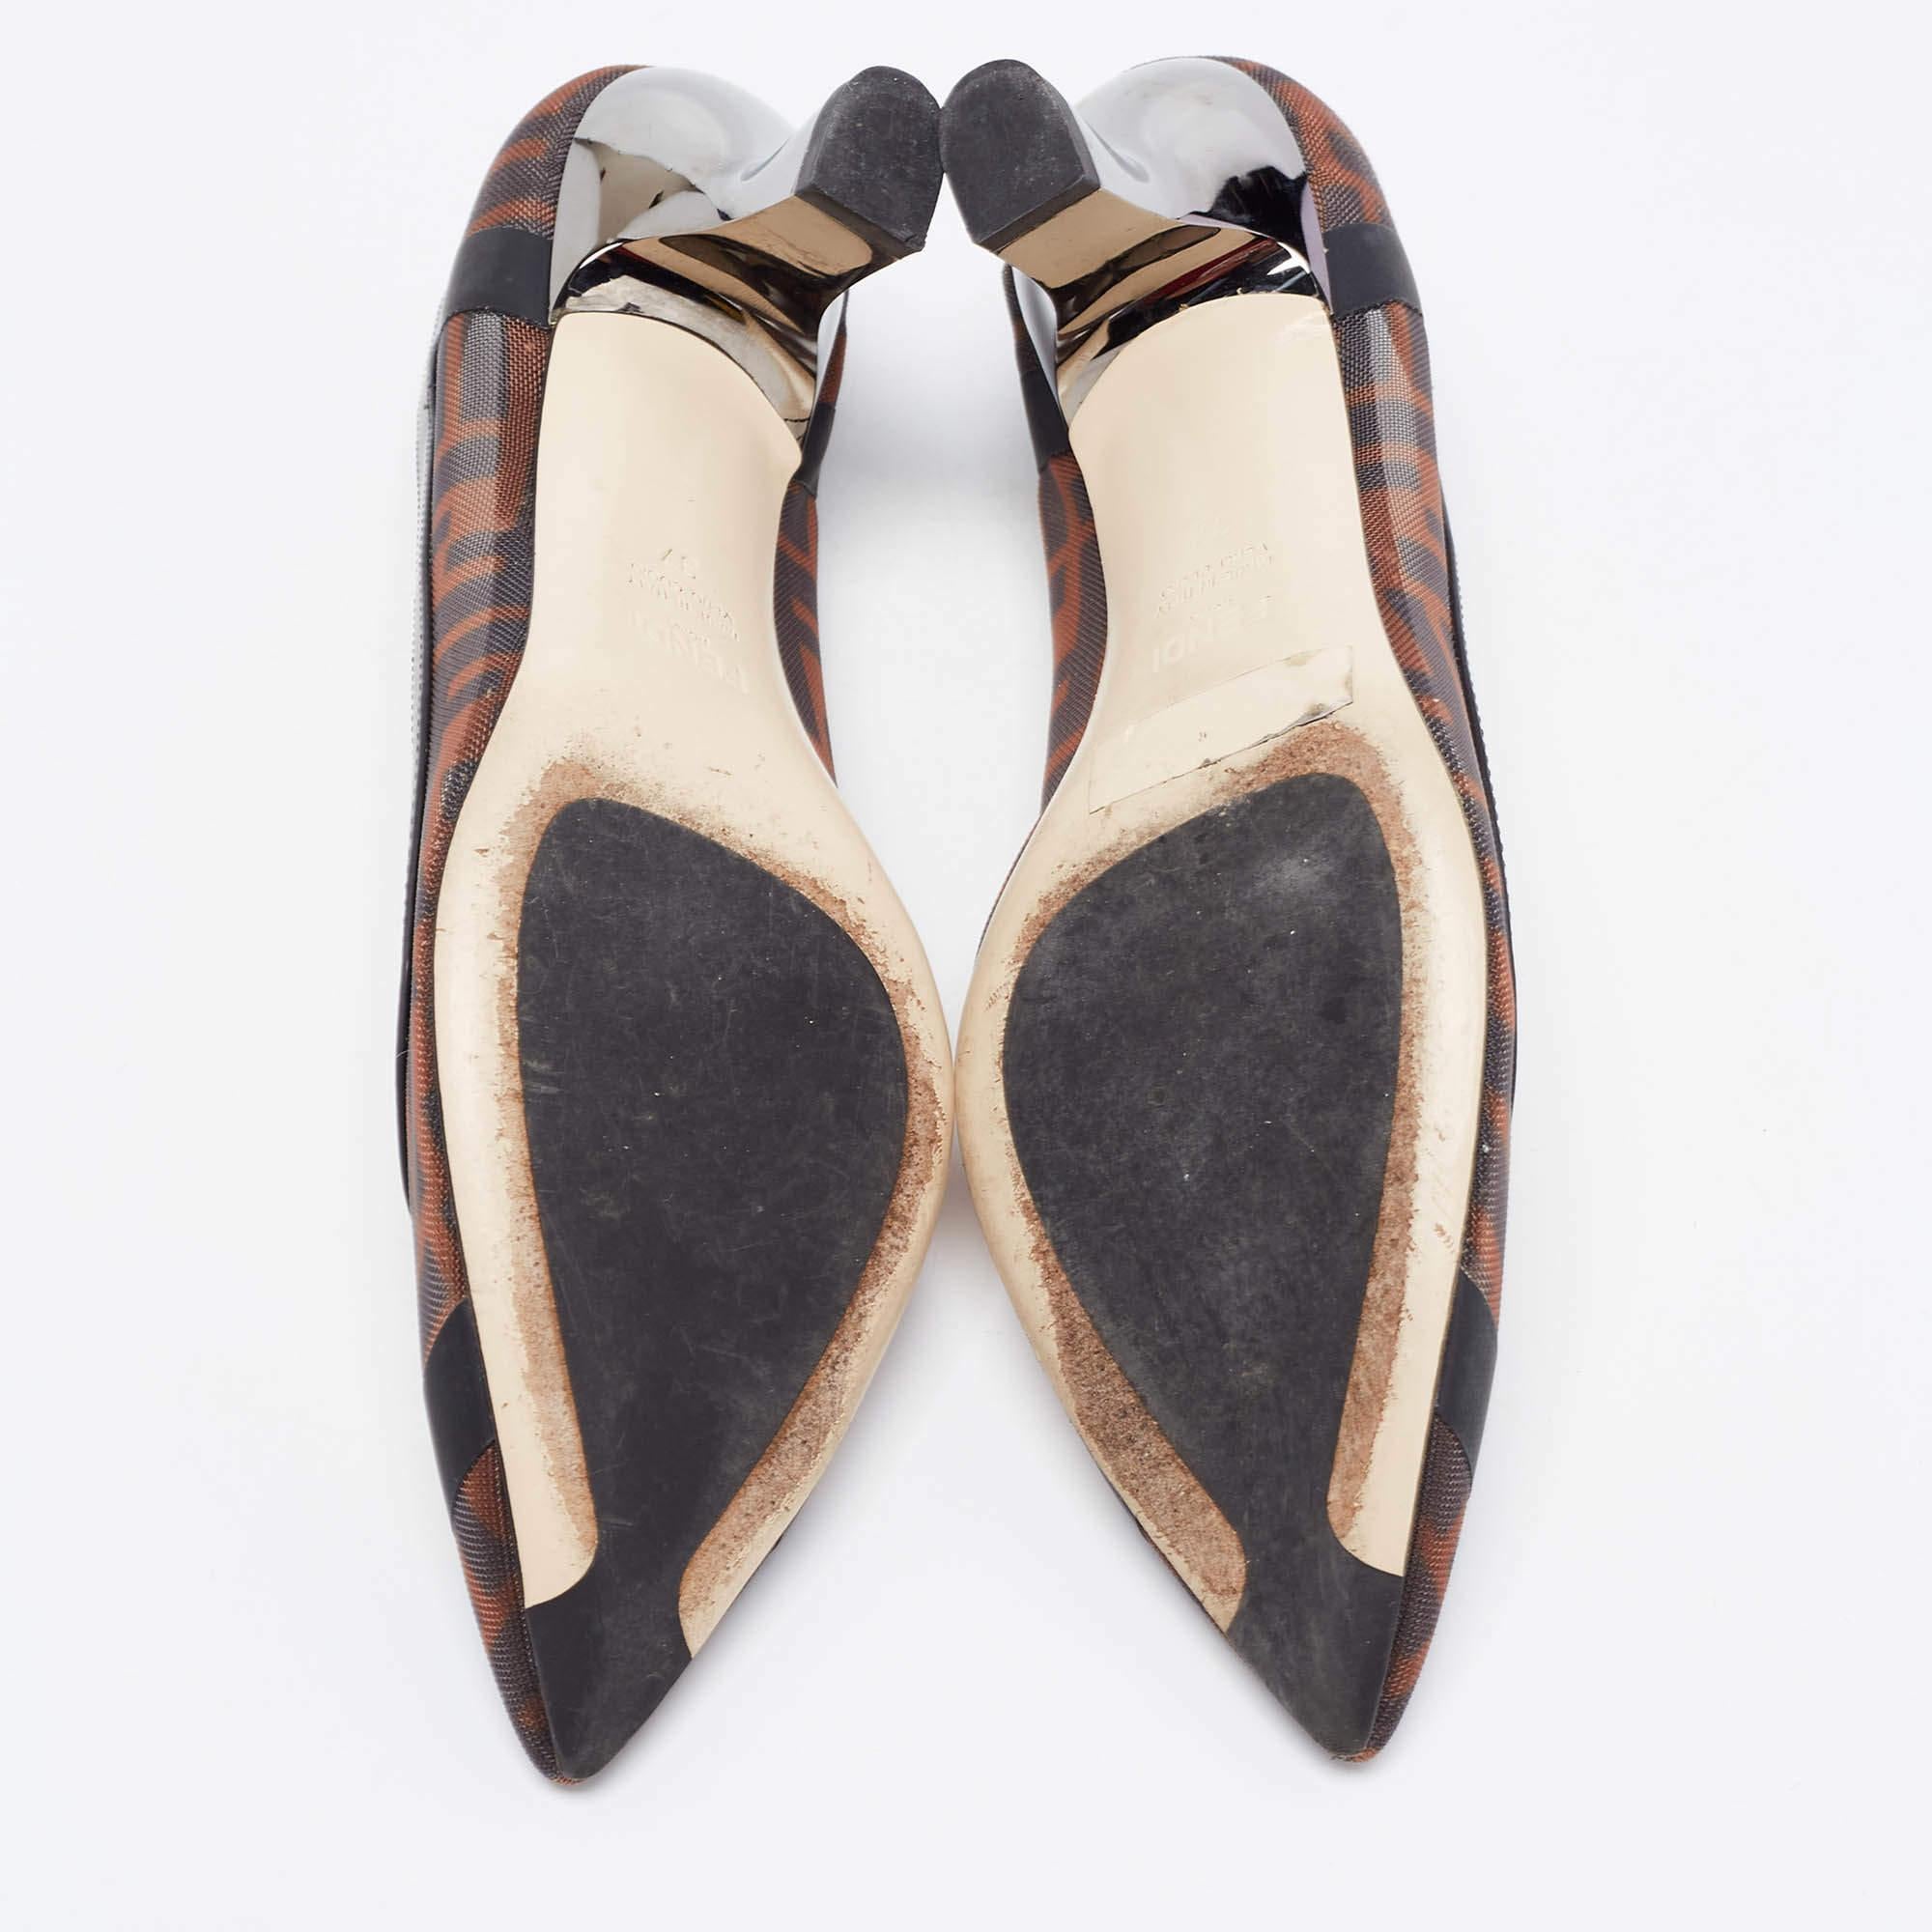 Fendi Black/Brown Mesh And Leather Trim Colibri Pointed Toe Pumps Size 37 5